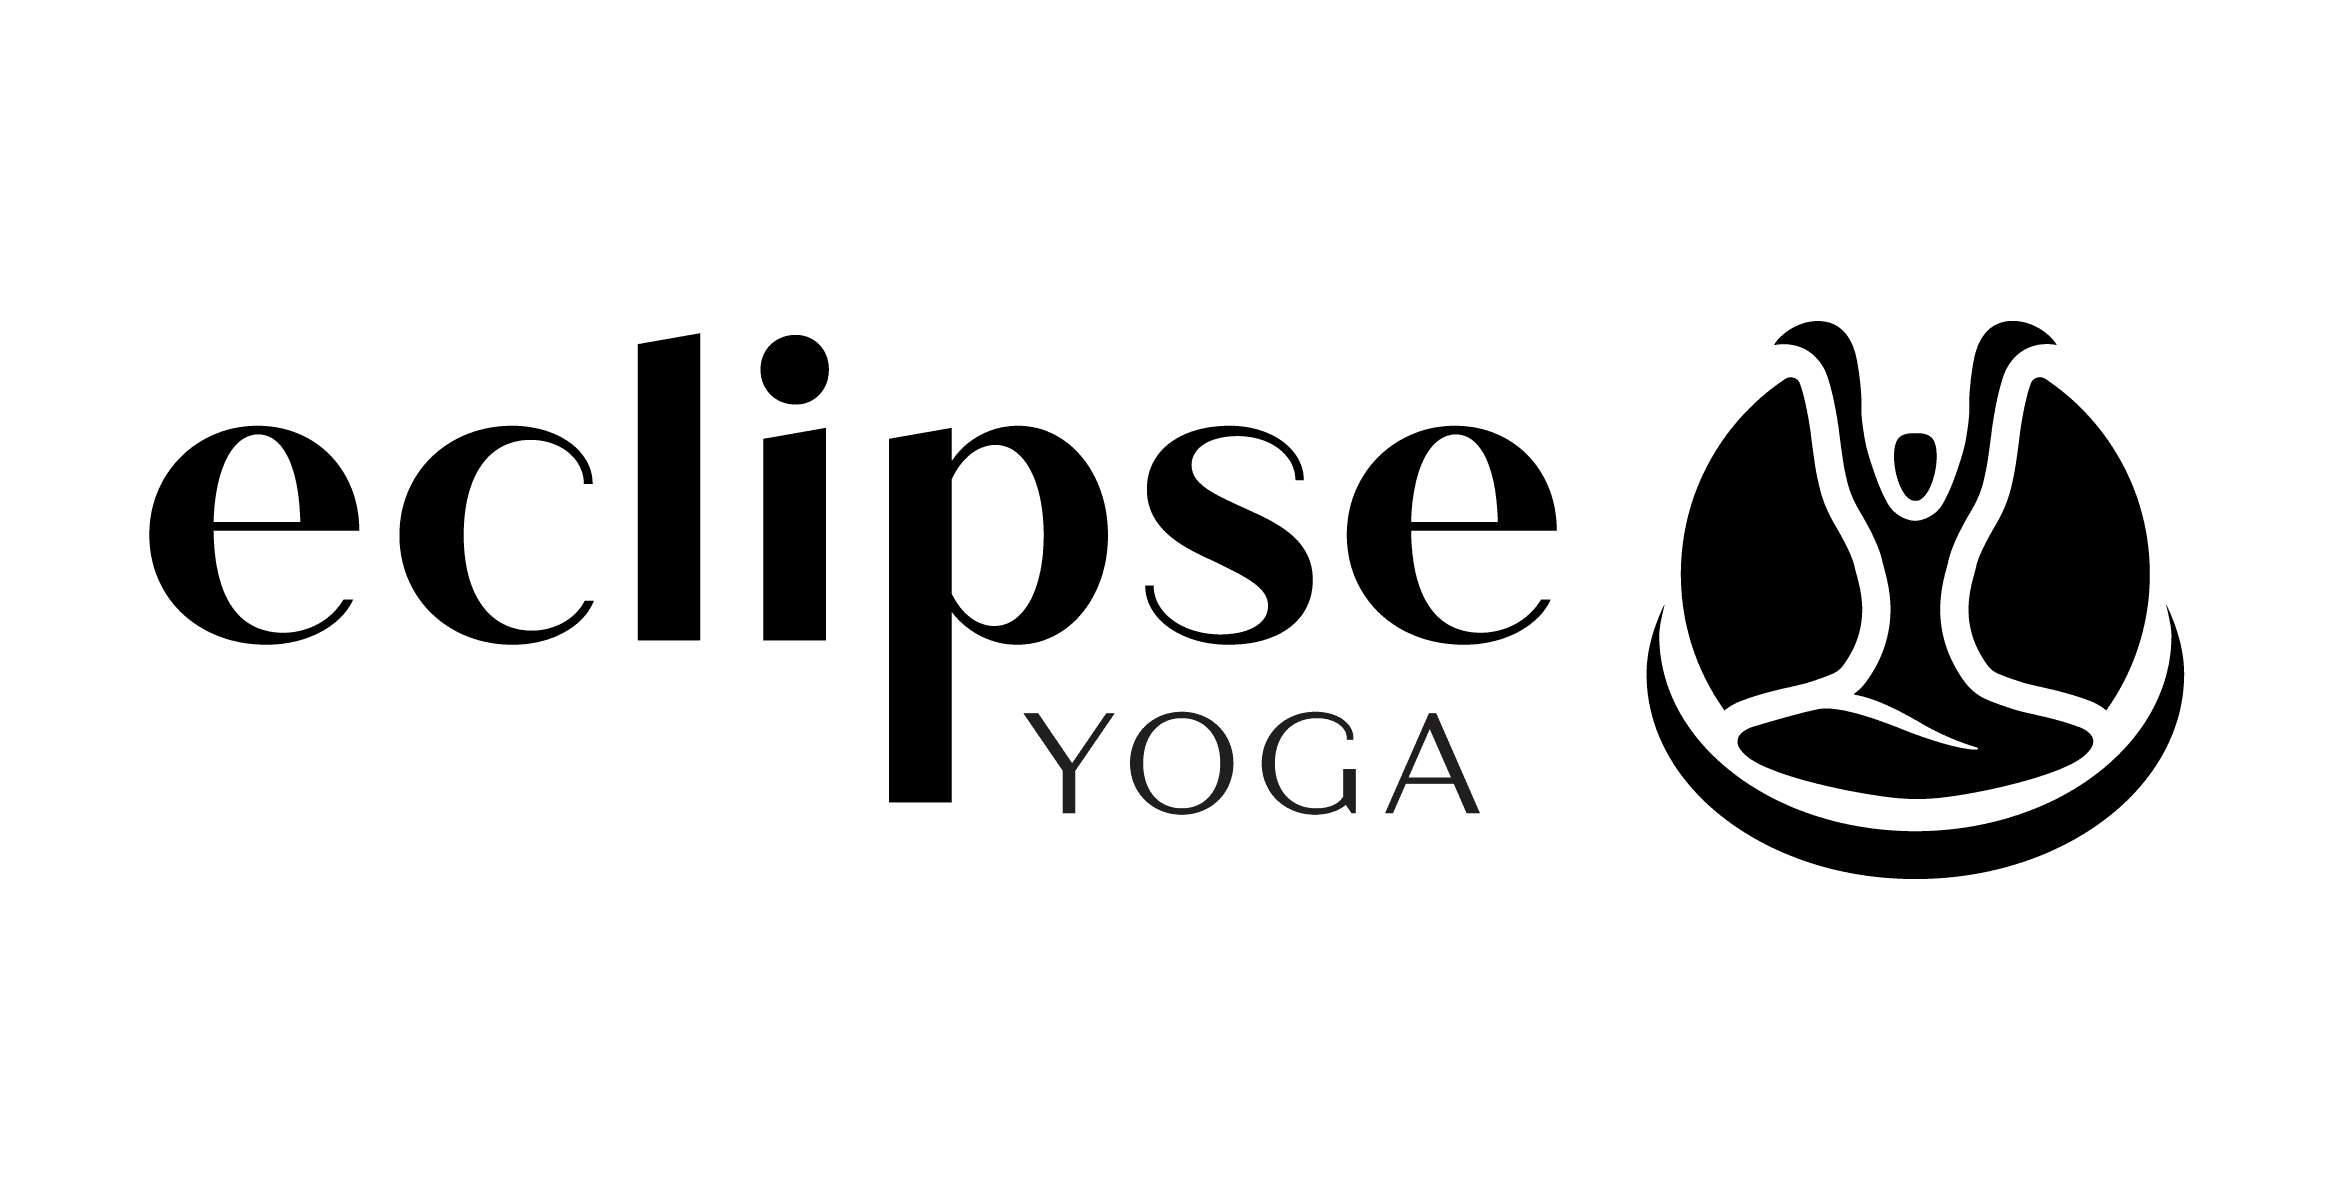 Eclipse Yoga